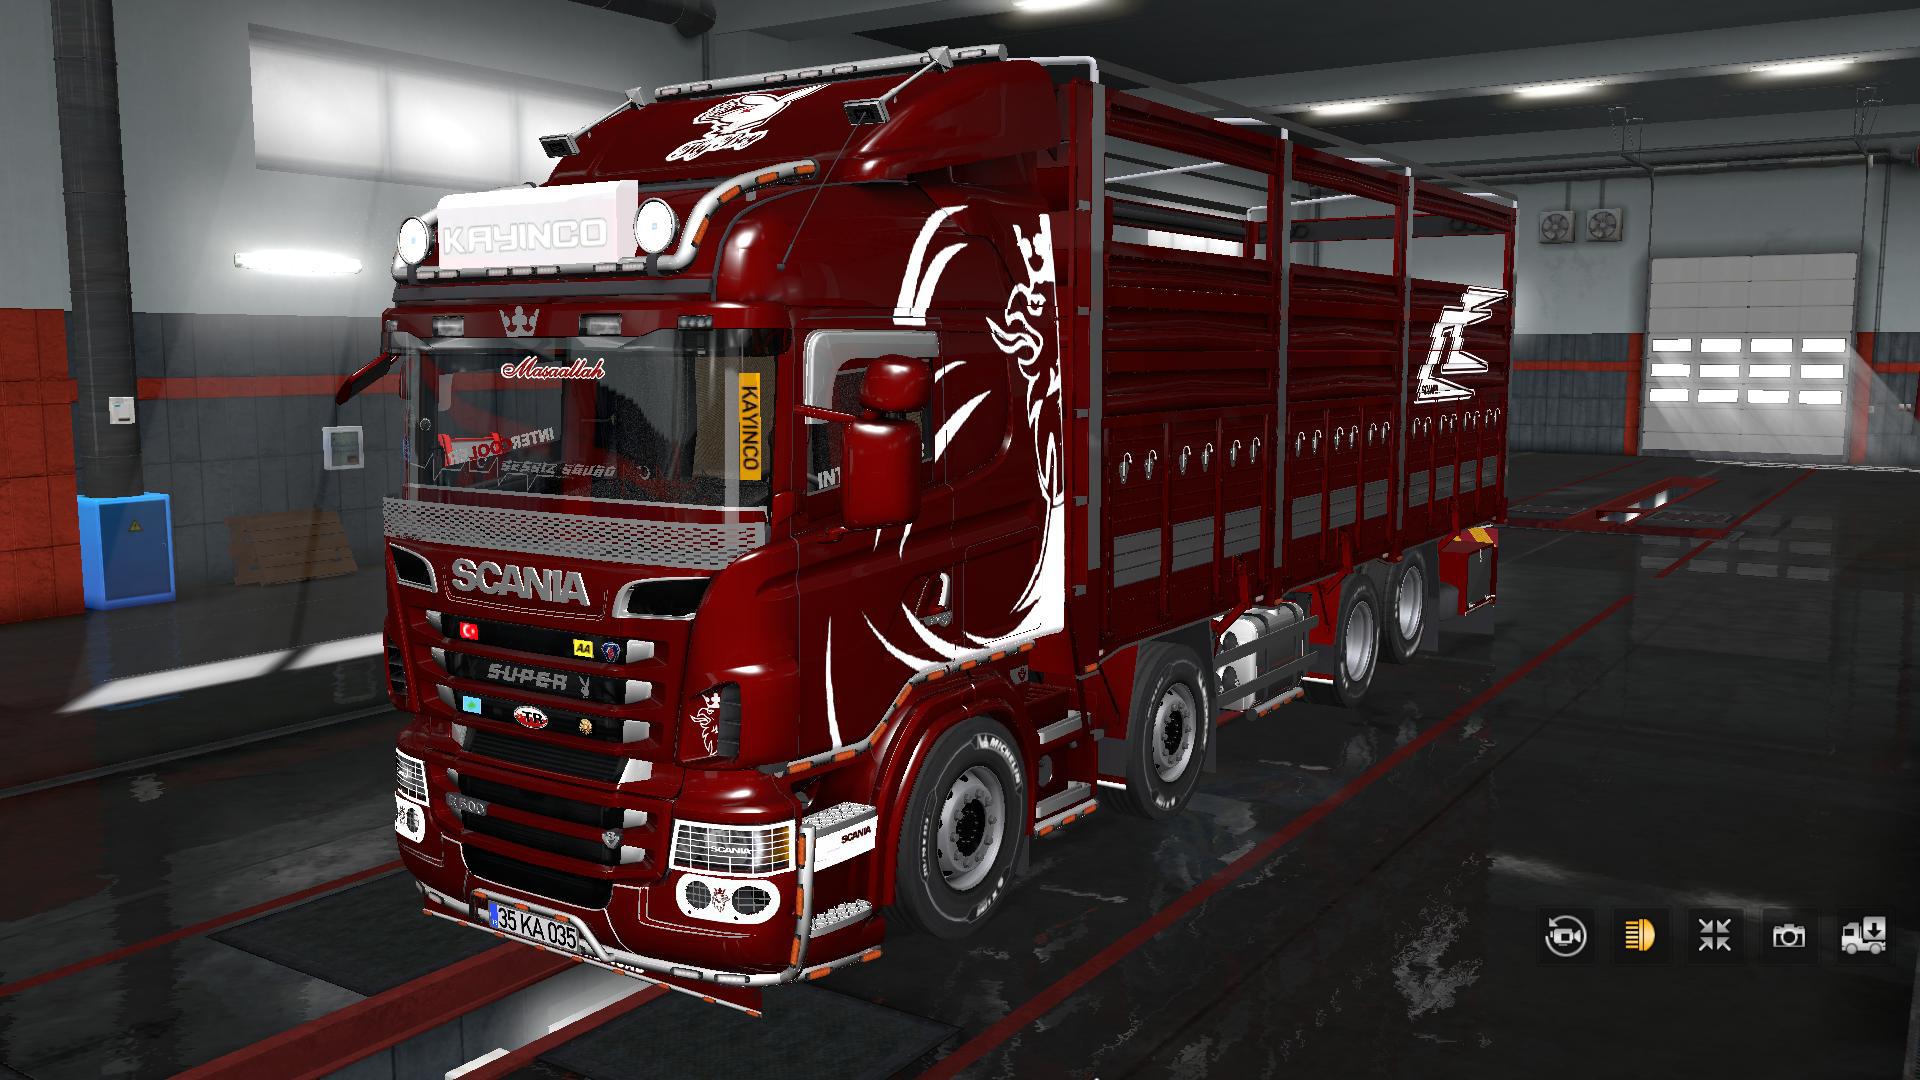 Ets Scania R V X Euro Truck Simulator Mods Club 2115 Hot Sex Picture 6095